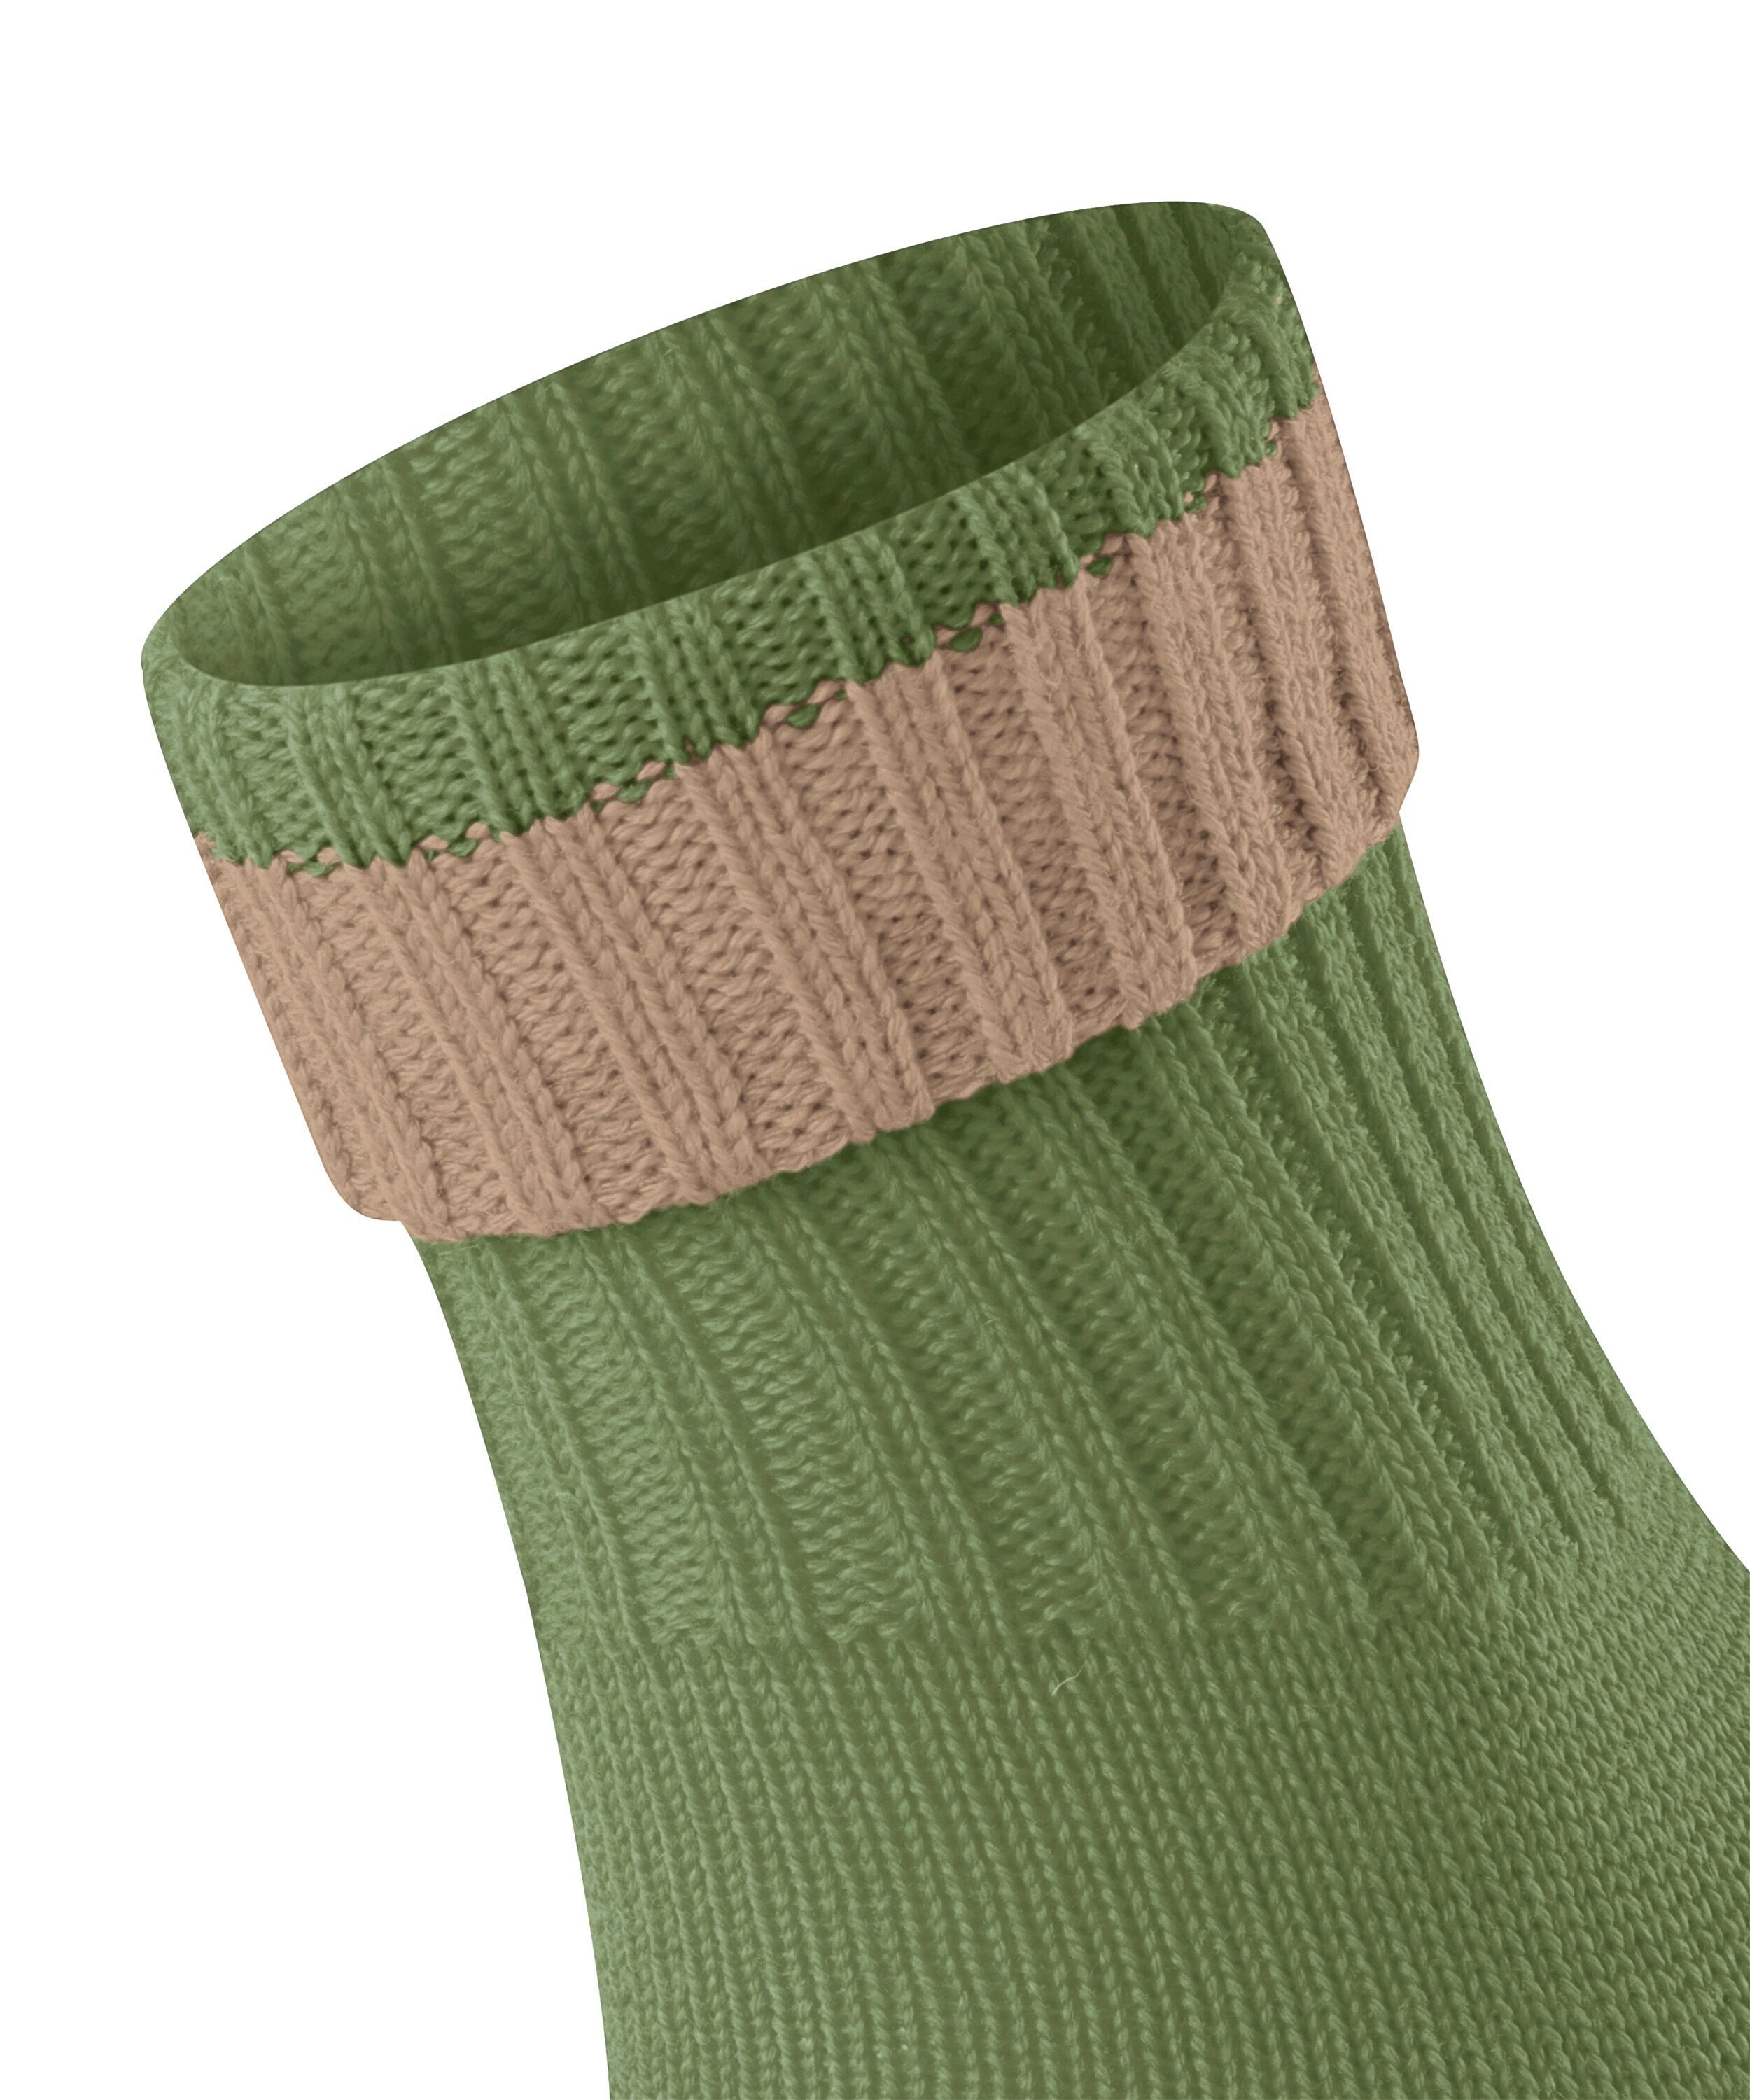 (7132) (1-Paar) shamrock Socken Plymouth Burlington